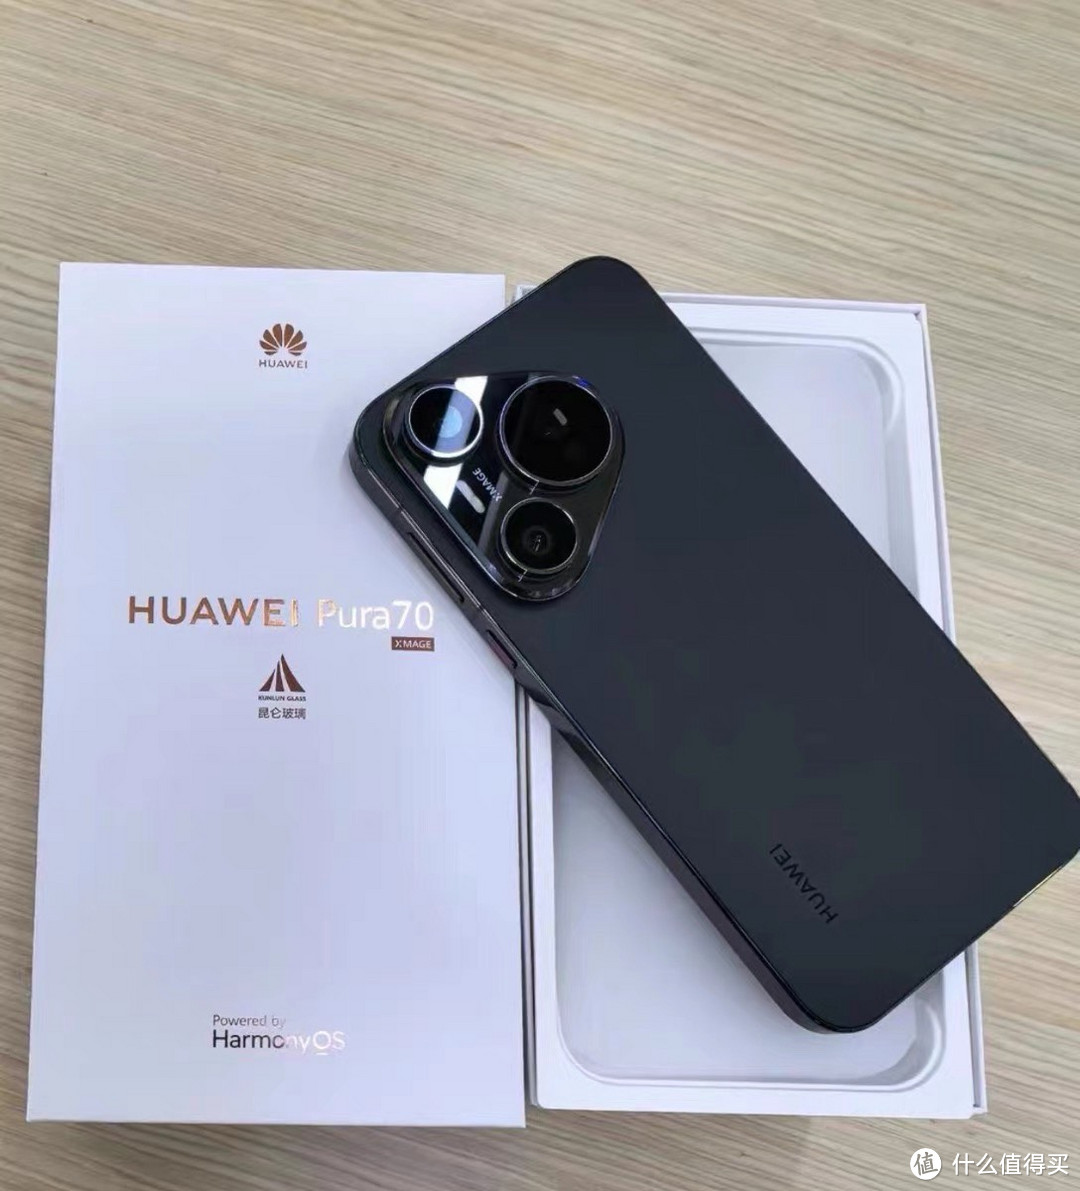 HuaweiPura70